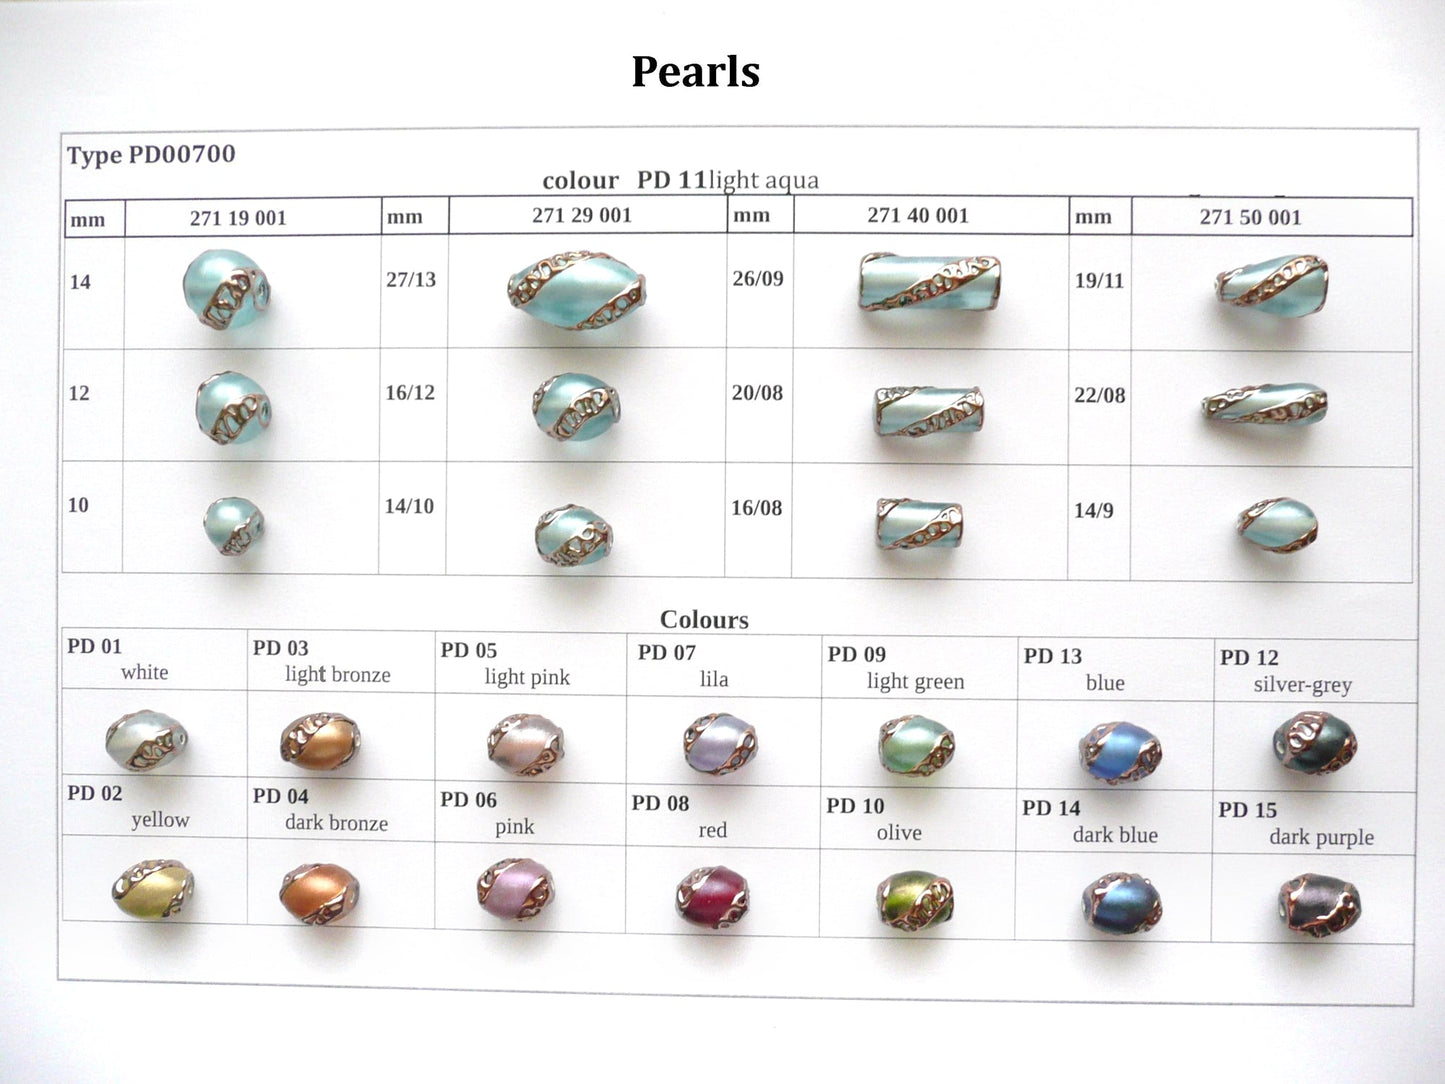 30 pcs Lampwork Beads Pearl Decor PD700 / Teardrop/Pear (271-50-001), Handmade, Preciosa Glass, Czech Republic